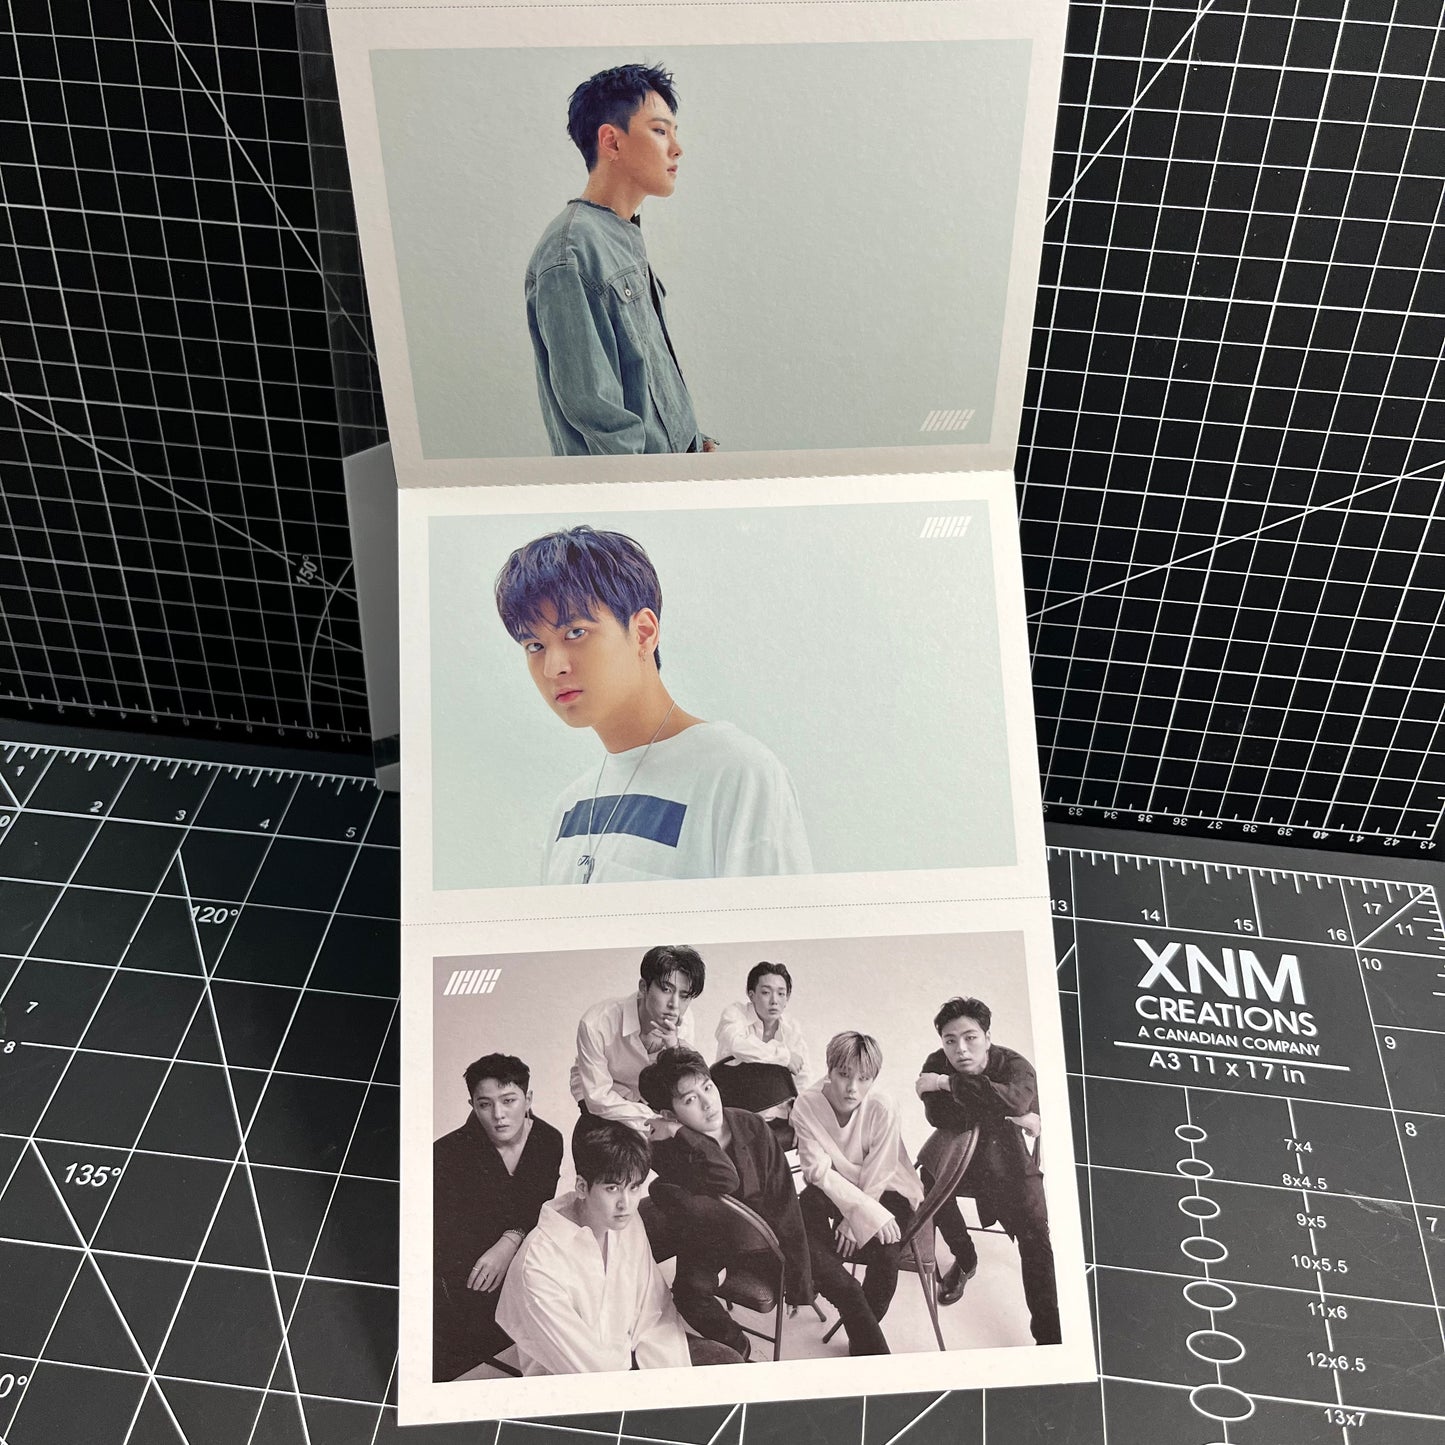 iKON The 1st Mini Album New Kids: Continue (Blue Ver.) - No Photocard